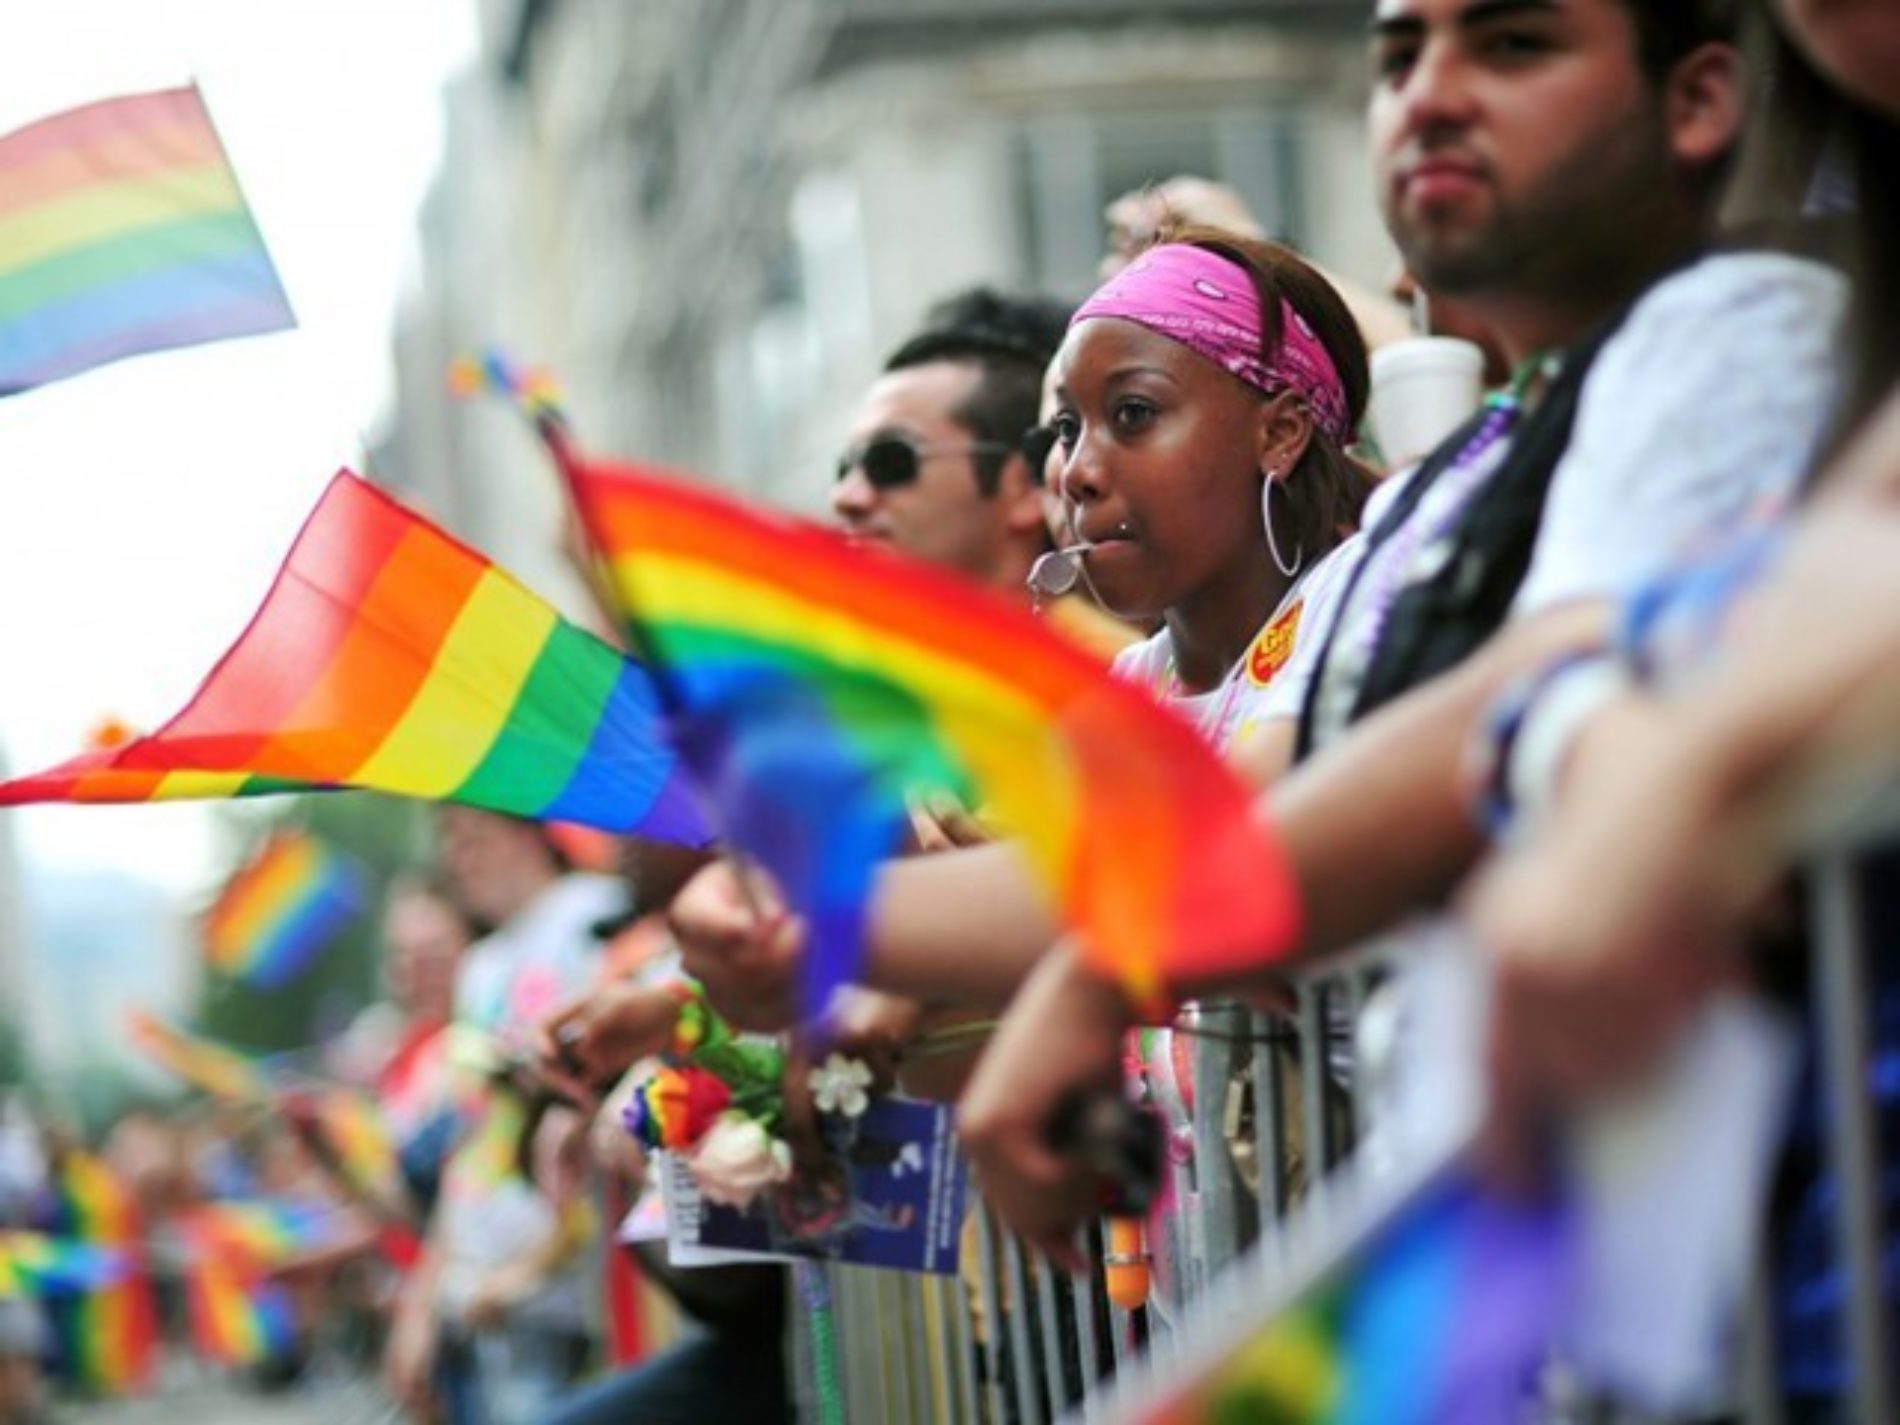 John Pavlovitz: Yes, Homosexuality Absolutely is A Choice